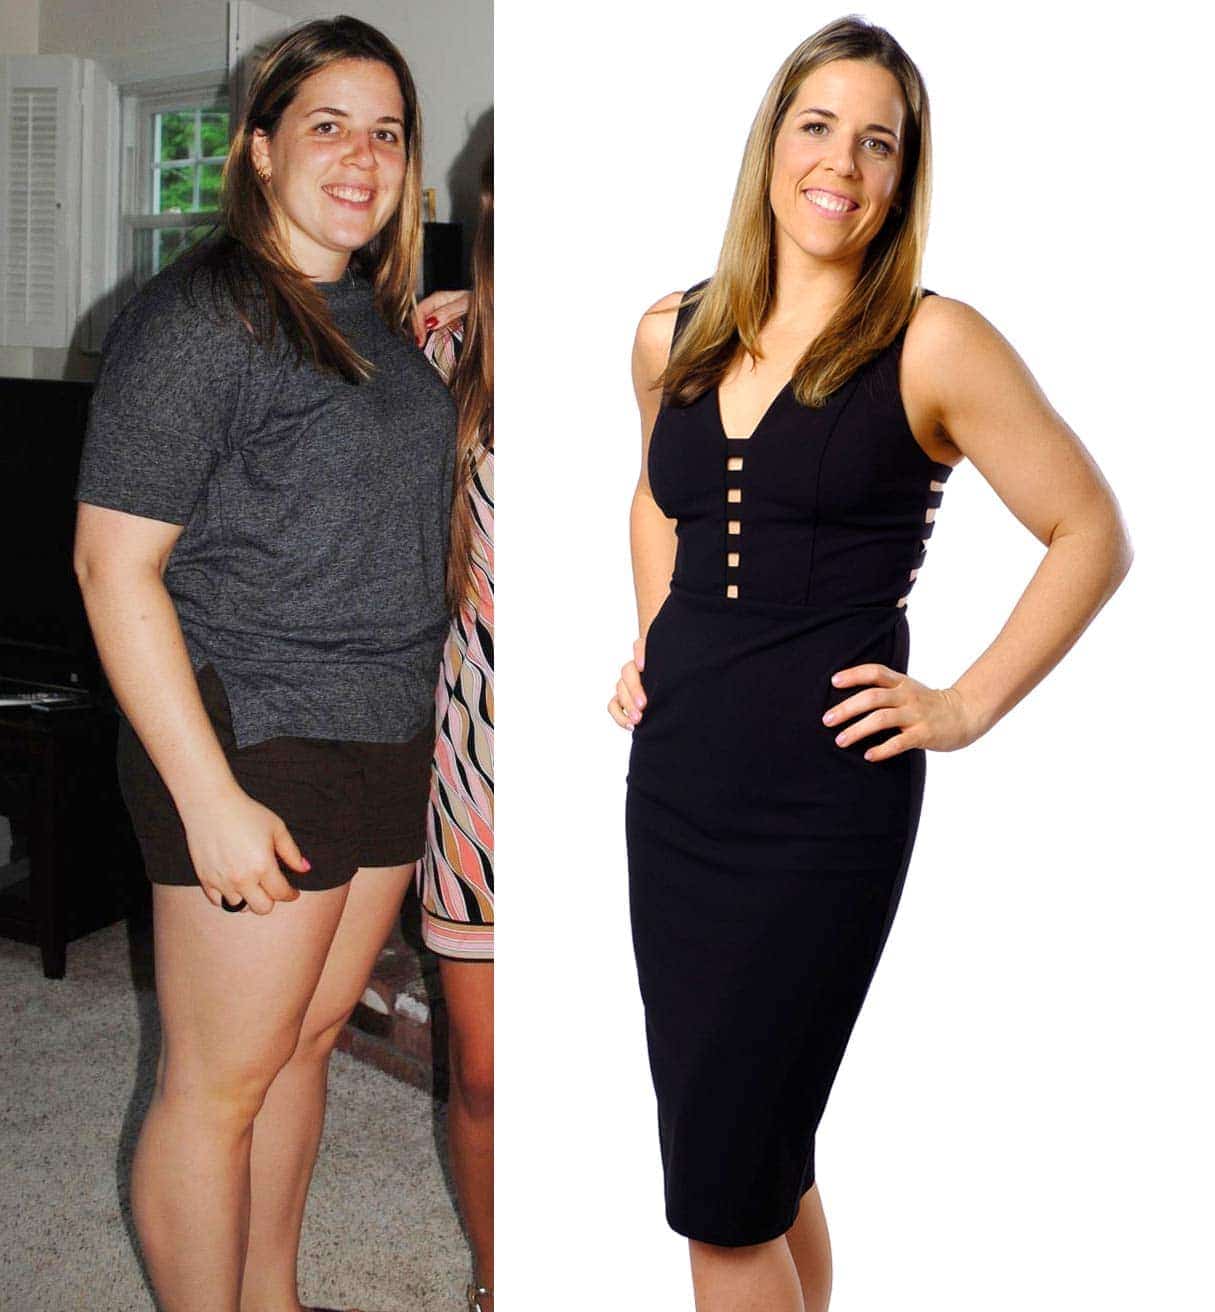 Skinny fat transformation Woman